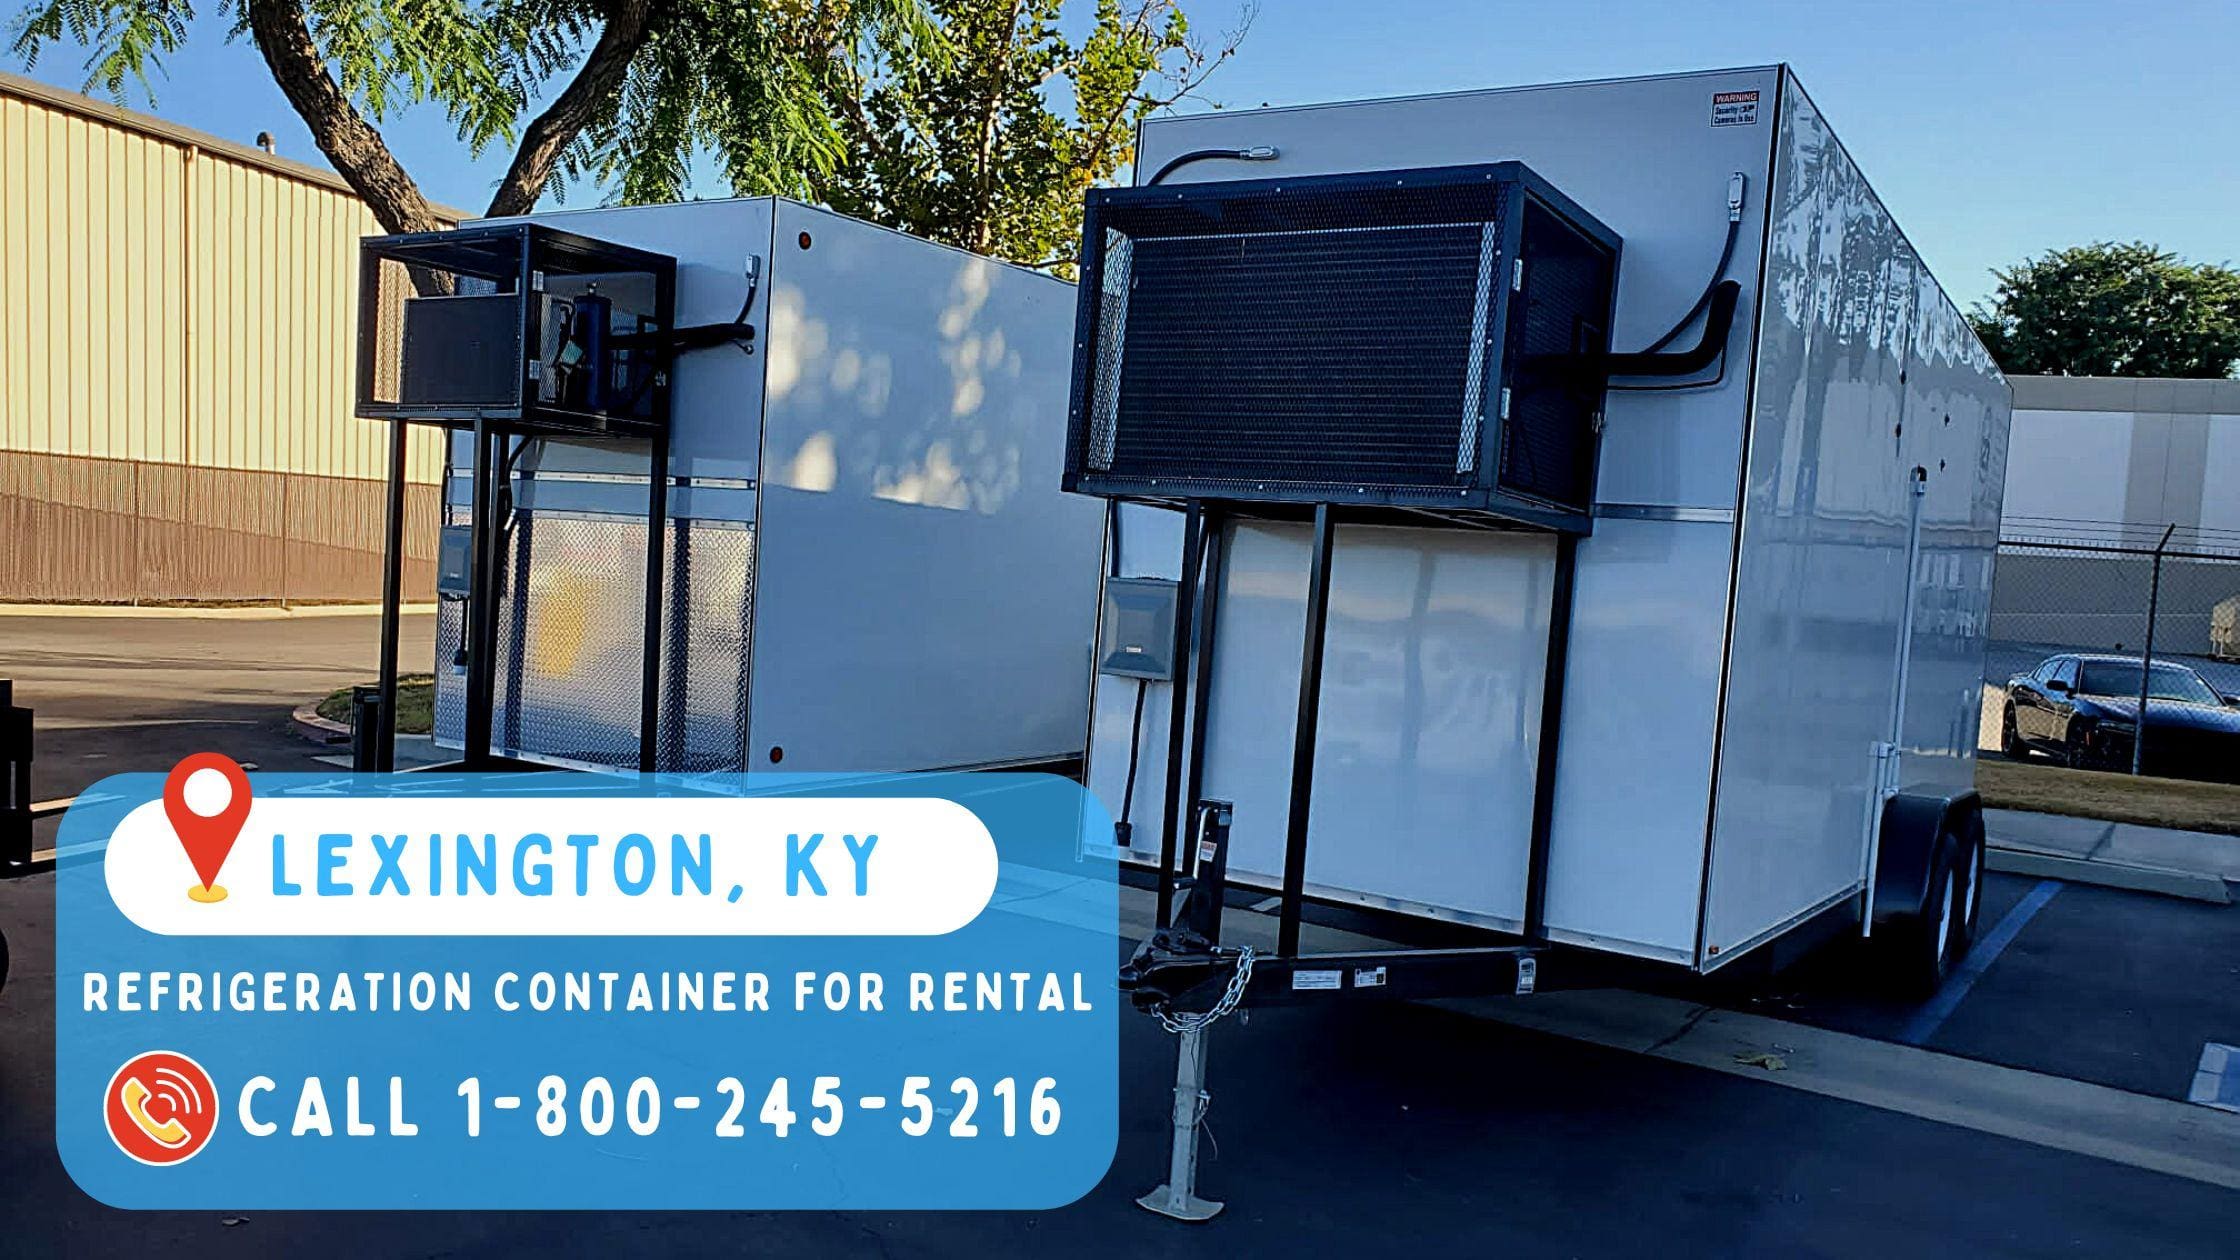 Refrigeration Container for rental Lexington, KY